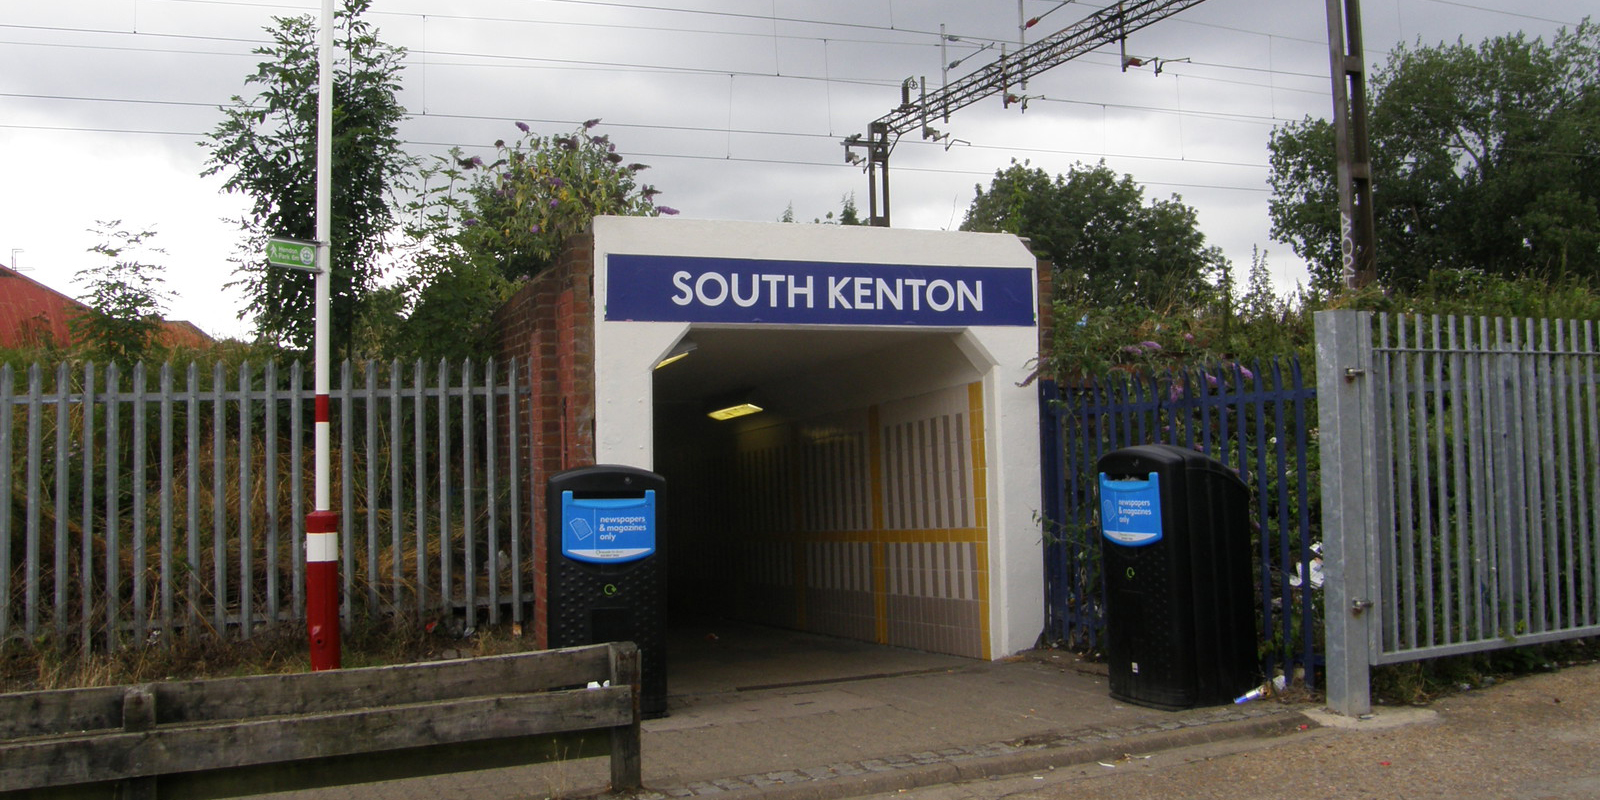 South Kenton minicabs, South Kenton taxis, South Kenton cabs